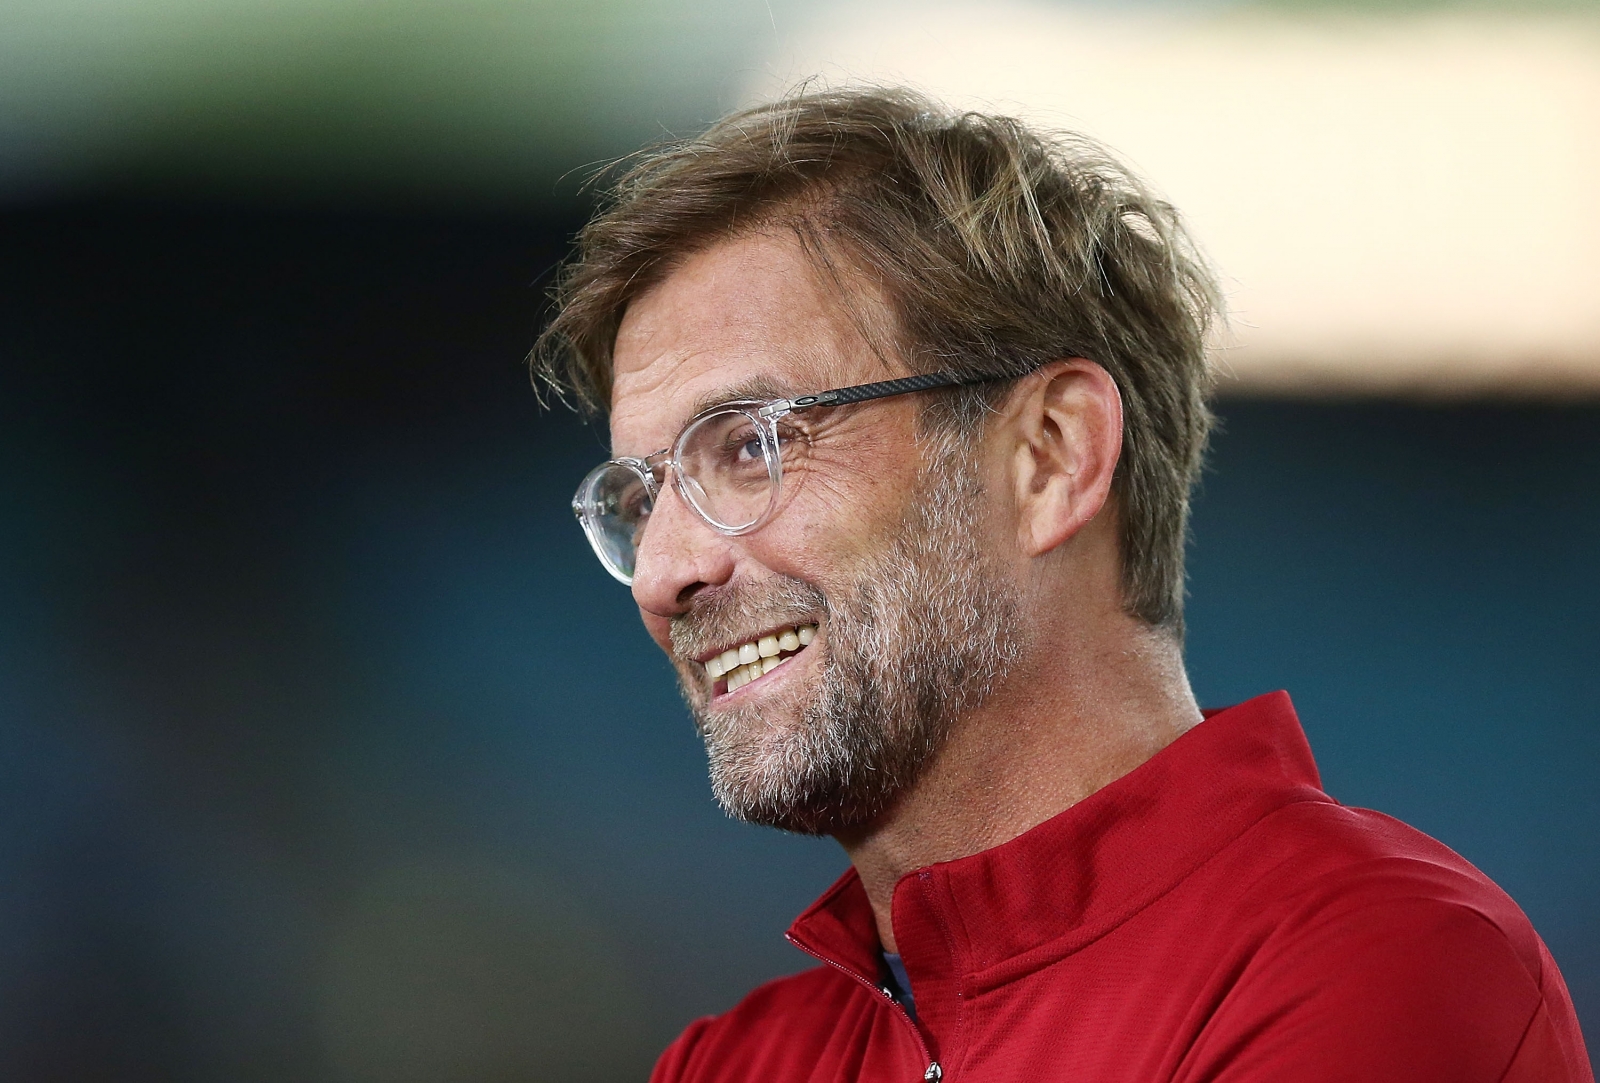 Liverpool boss Jurgen Klopp expected to manage Bayern Munich